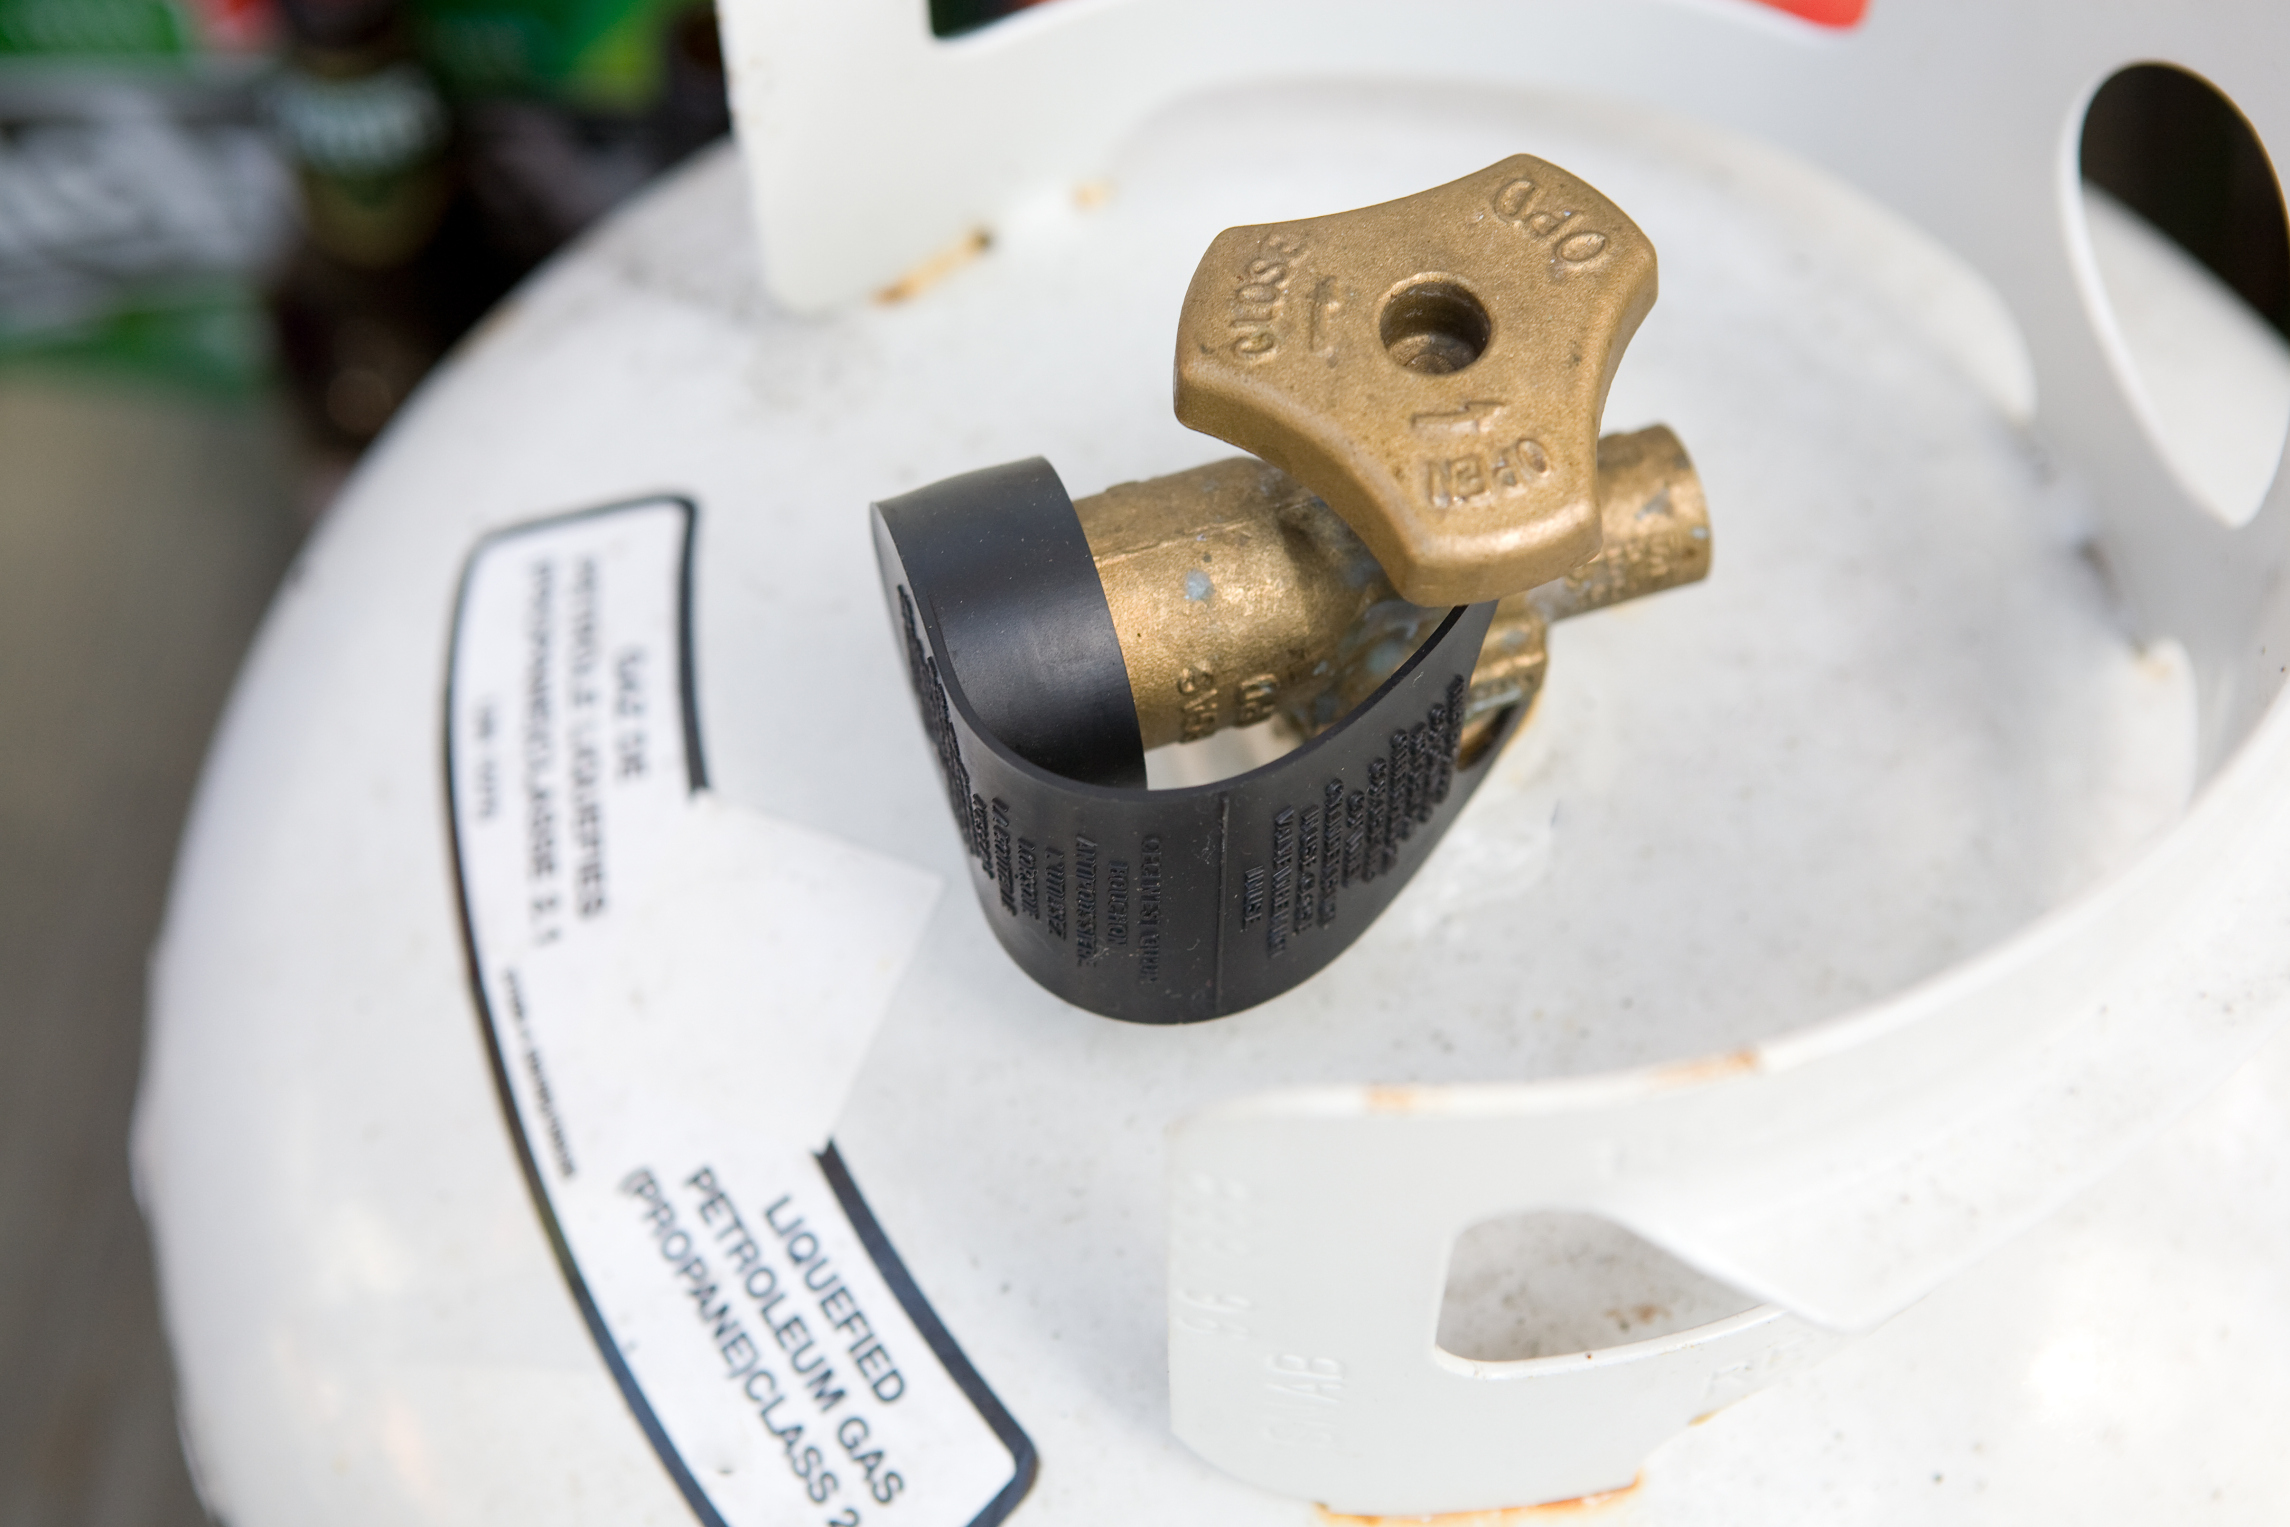 How to remove propane tank valves 